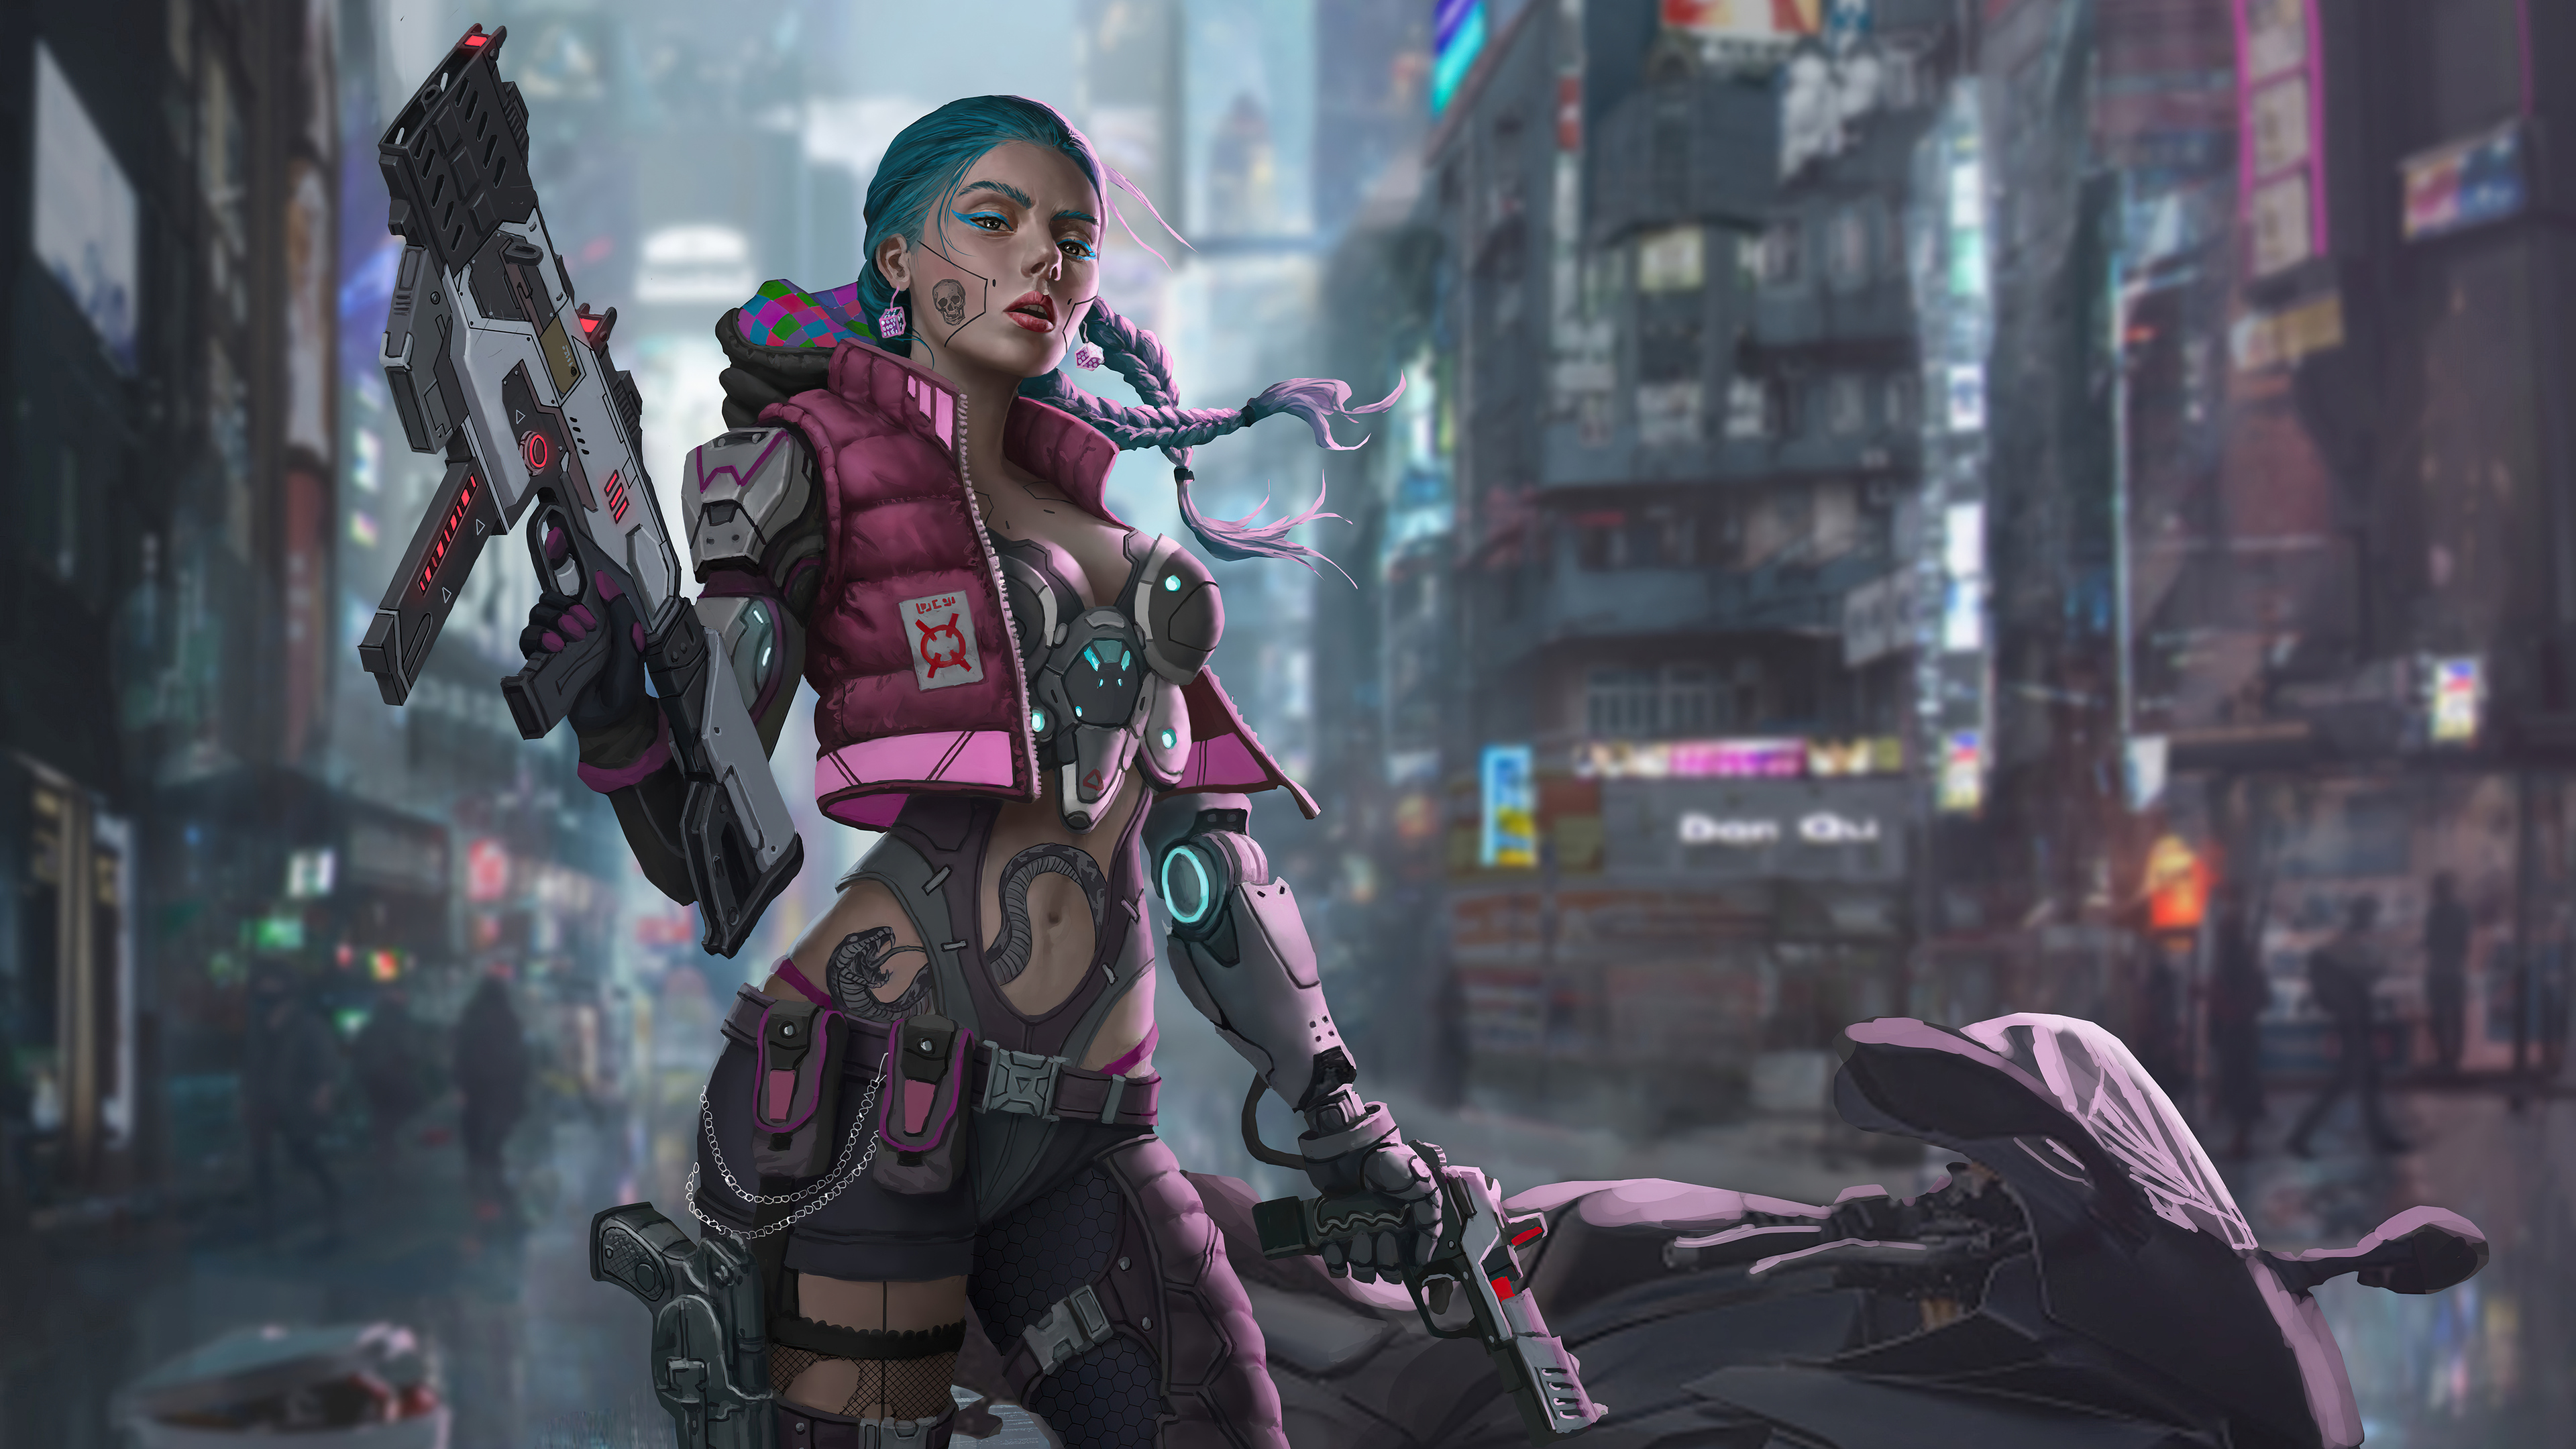 General 3840x2160 cyborg cyberpunk futuristic city women weapon motorcycle artwork depth of field CGI